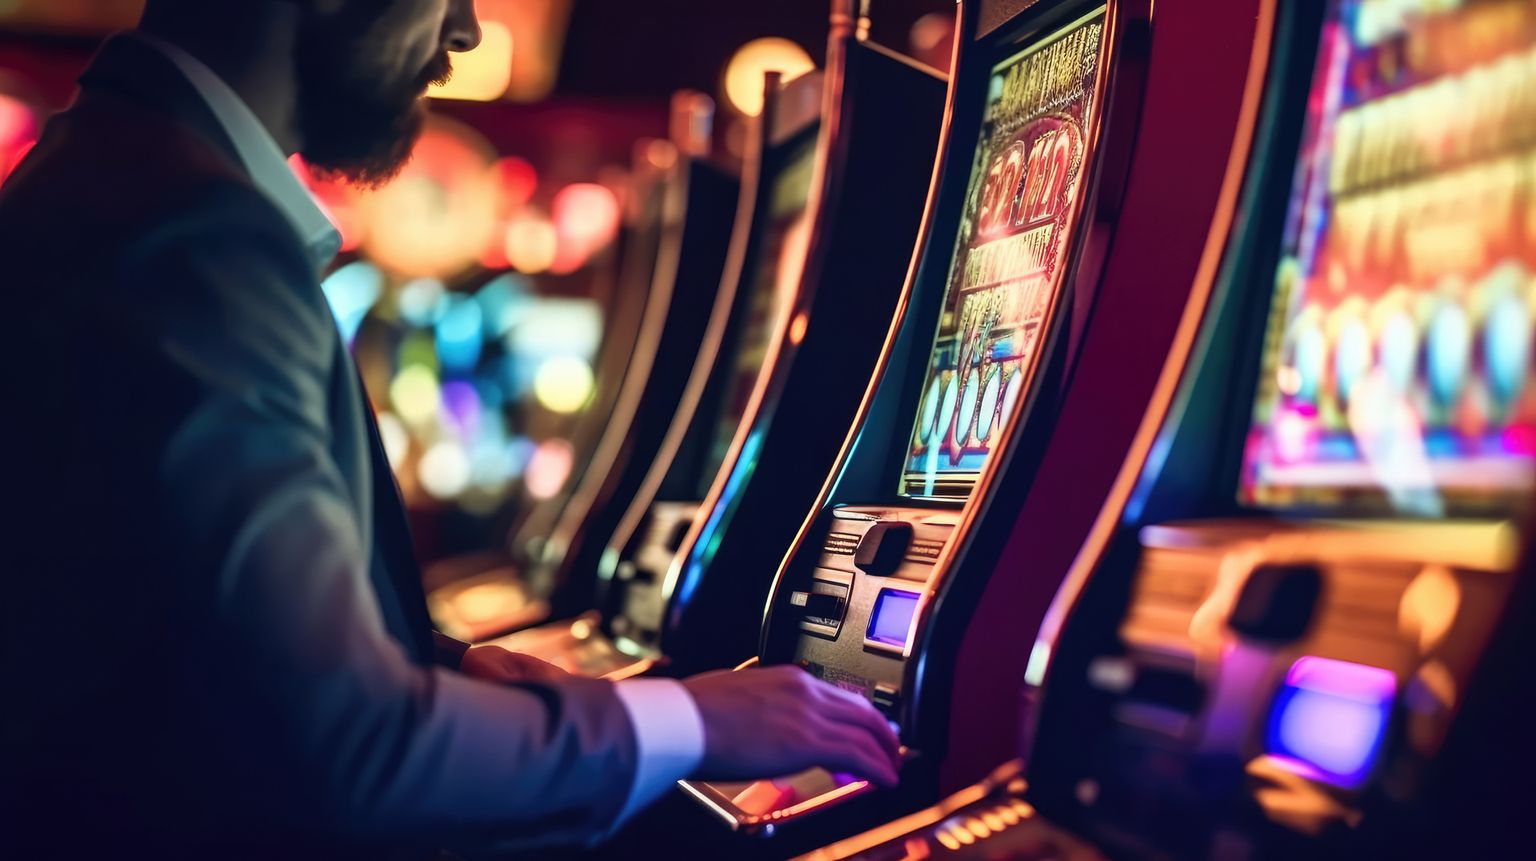 Man with gambling addiction